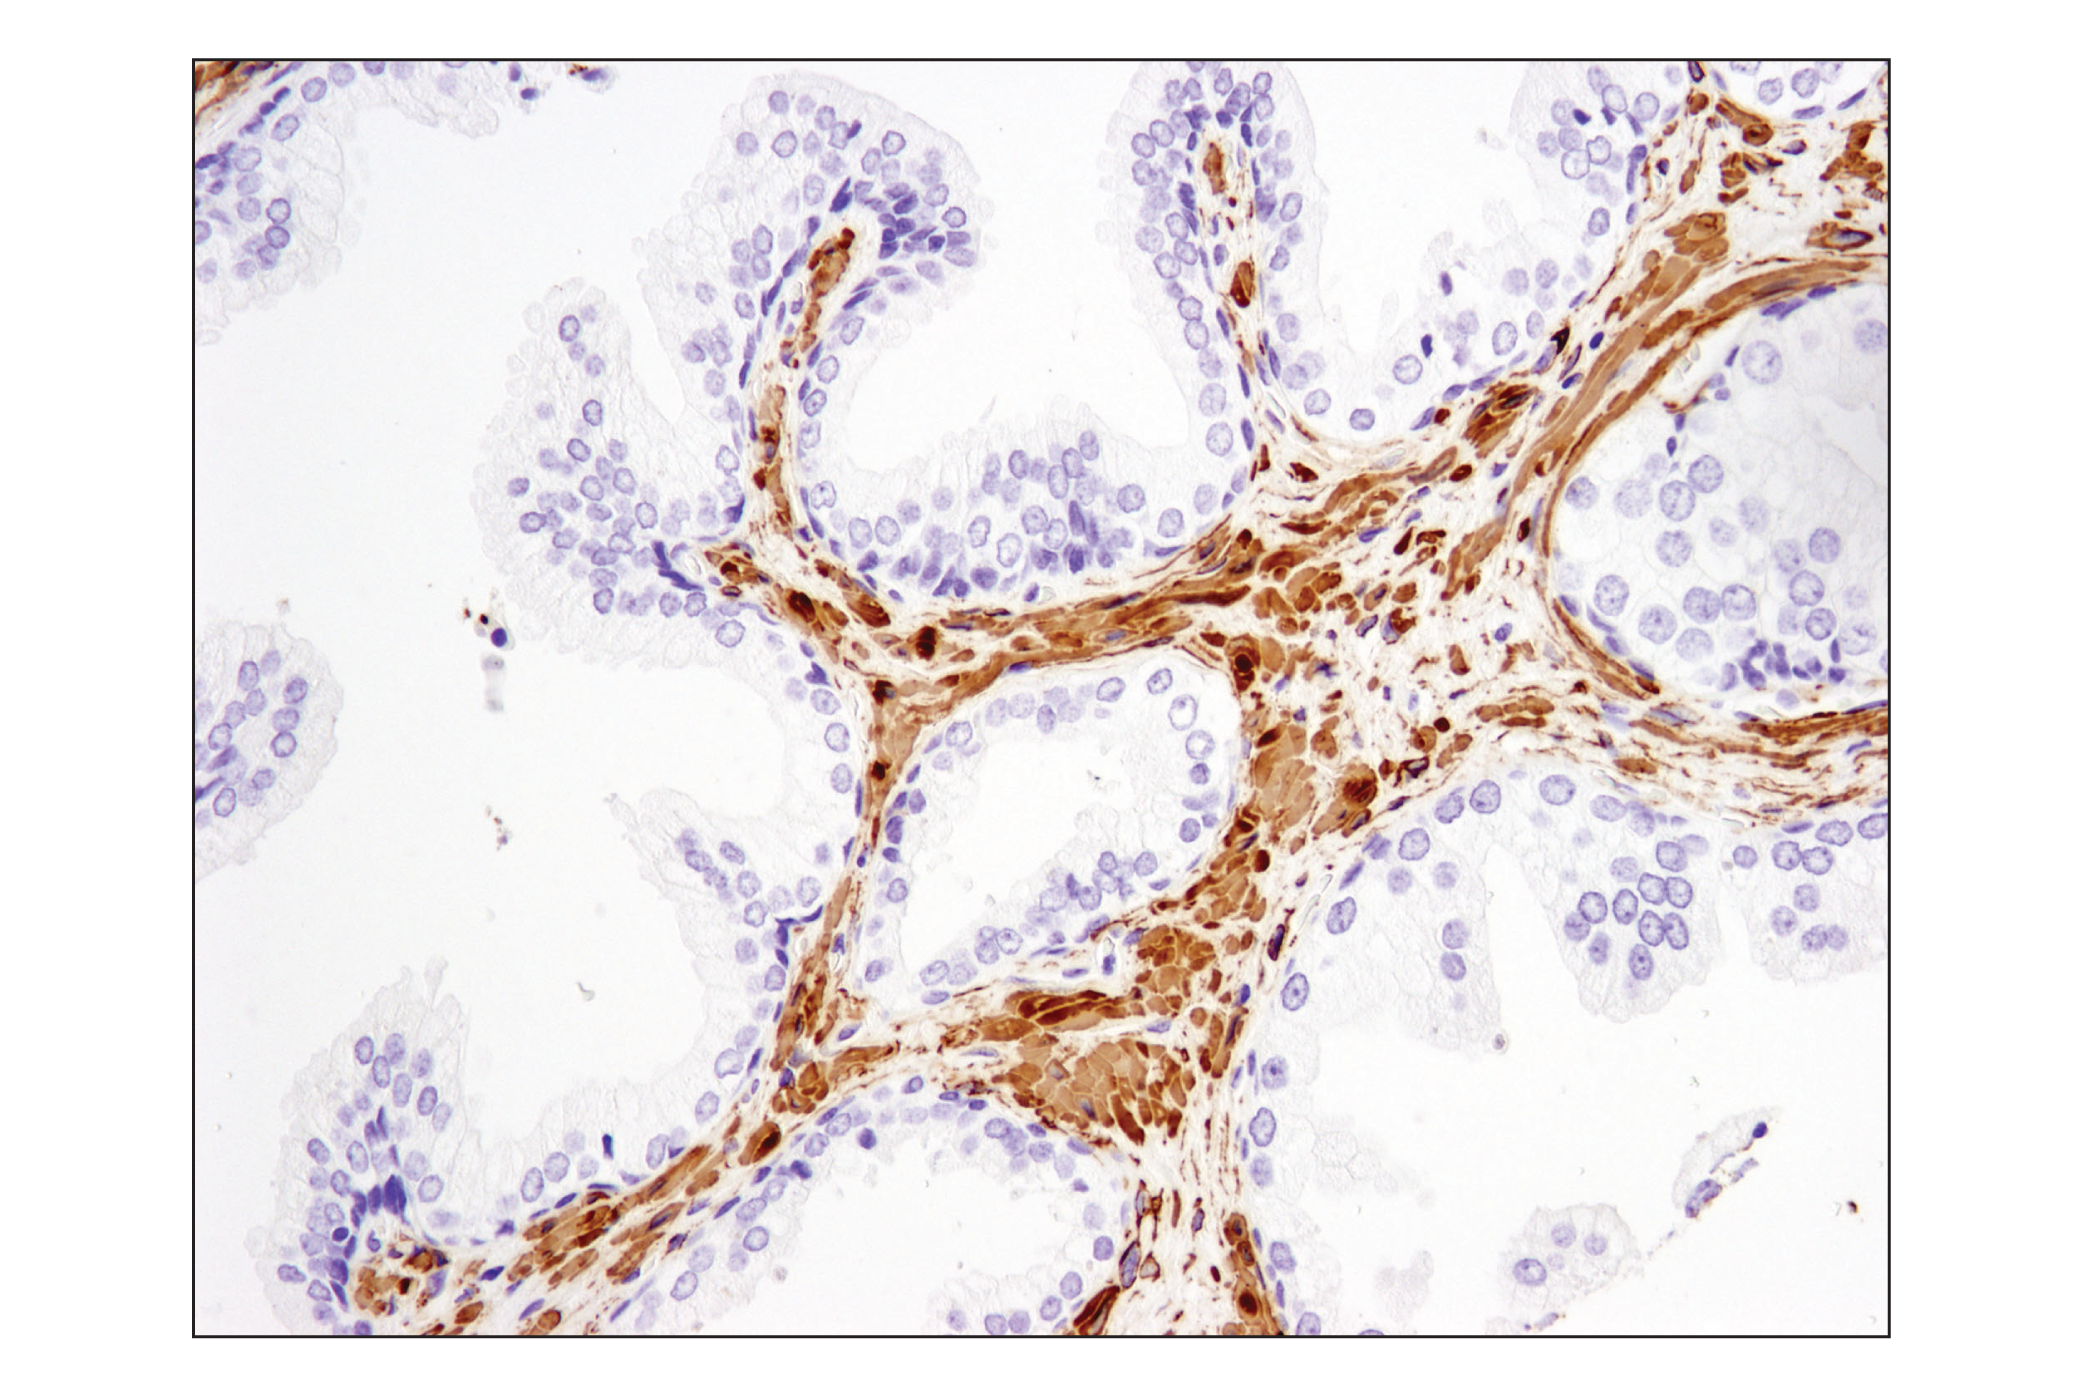  Image 37: Cancer Associated Fibroblast Marker Antibody Sampler Kit